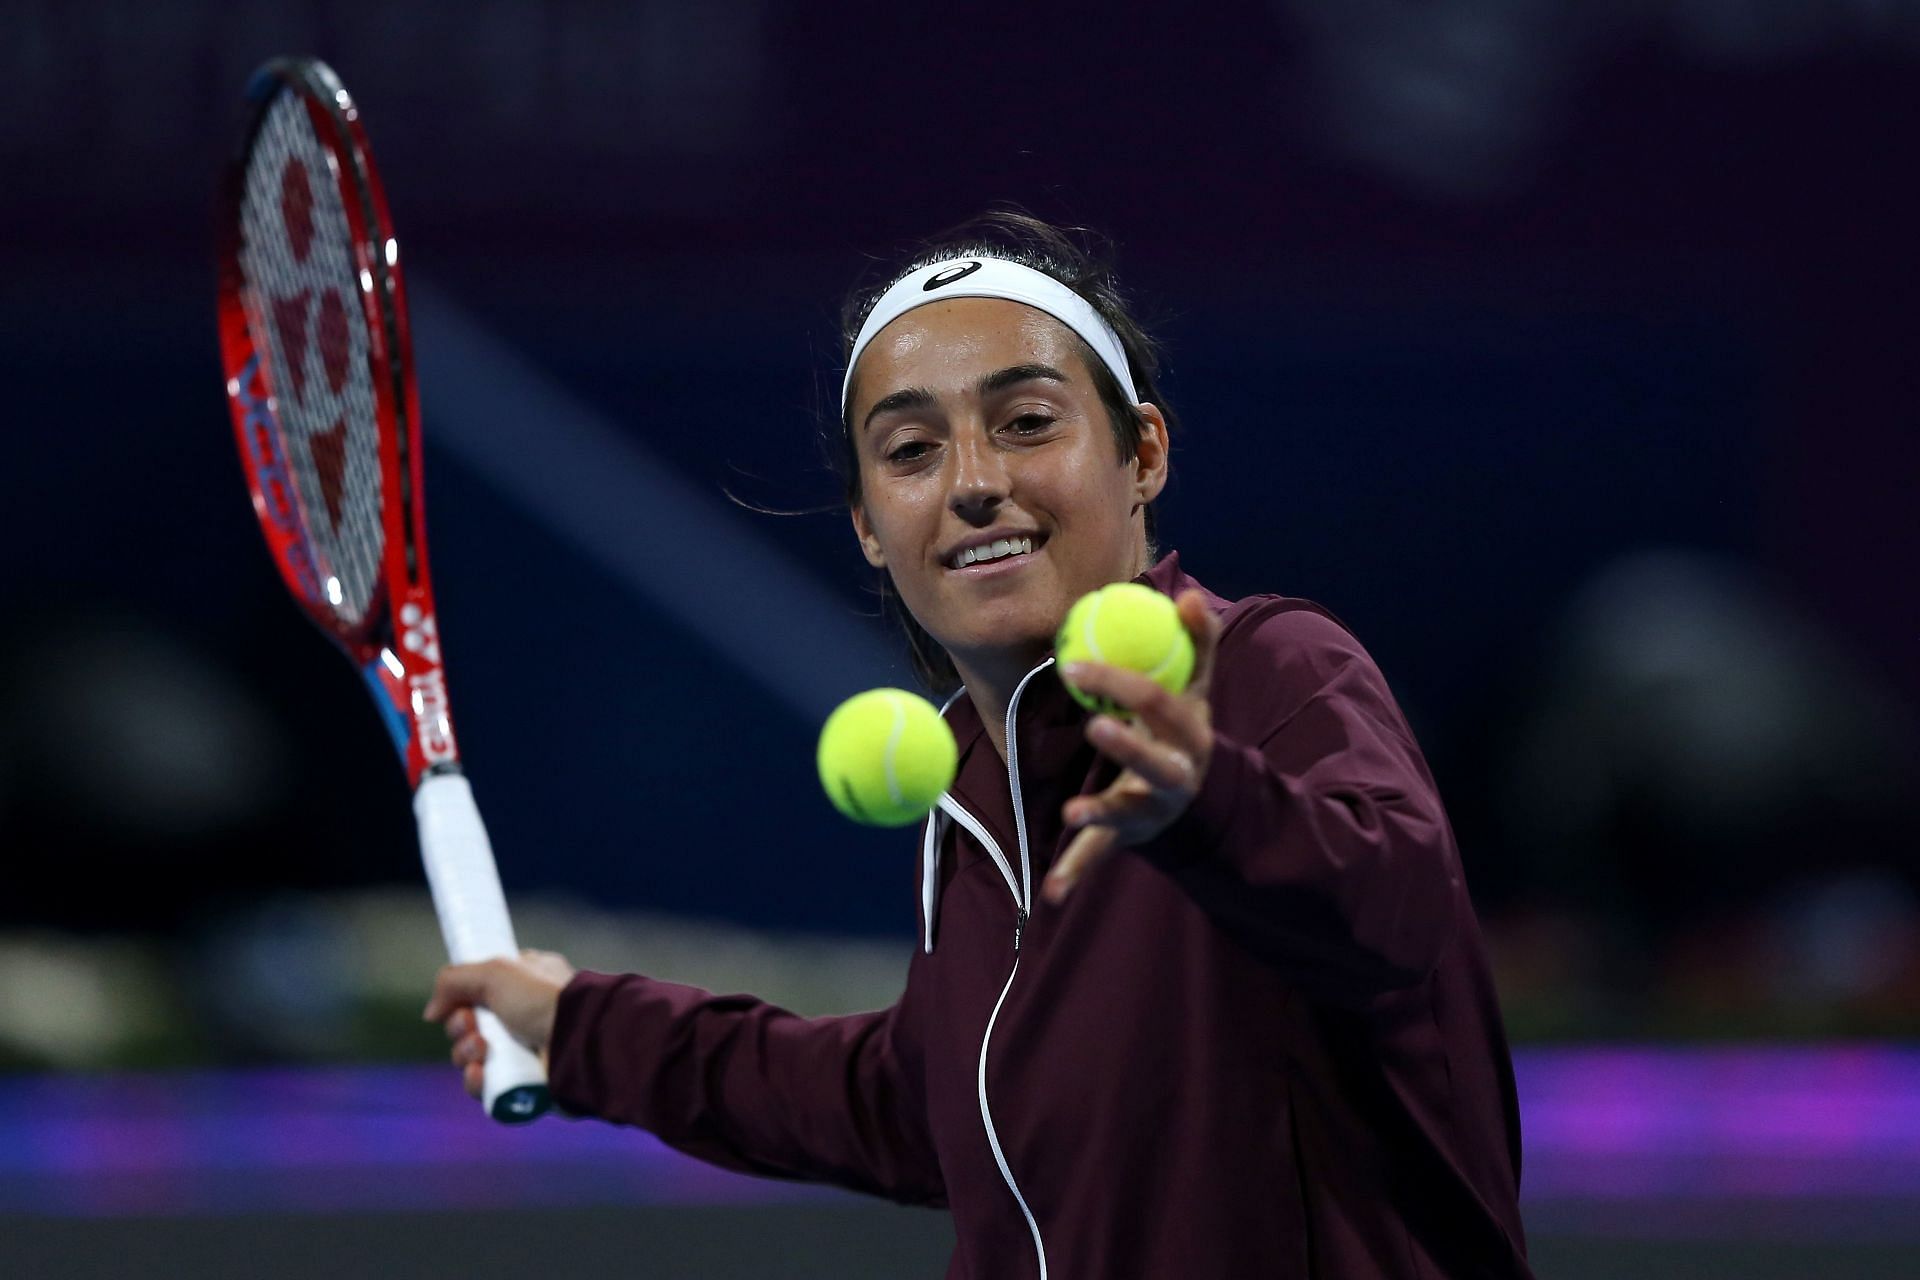 Caroline Garcia celebrates her first-round win over Simona Halep in Doha on Monday.